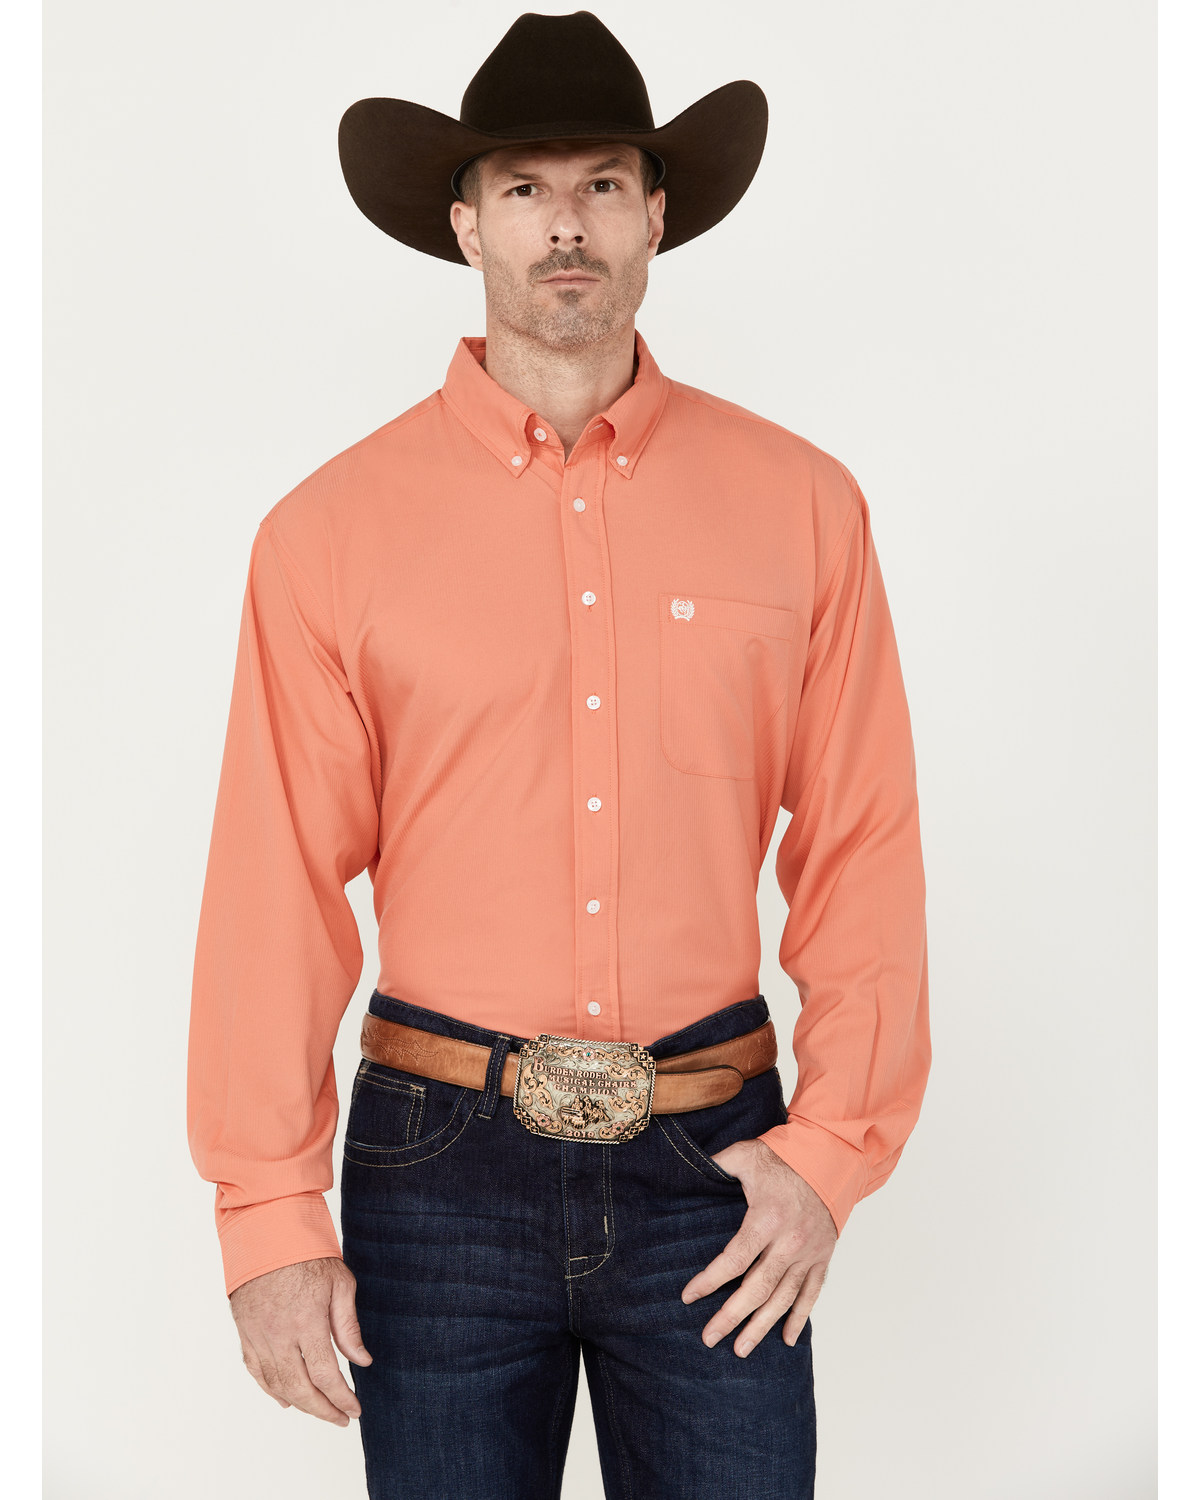 Cinch Men's Solid Long Sleeve ARENAFLEX Button-Down Western Shirt